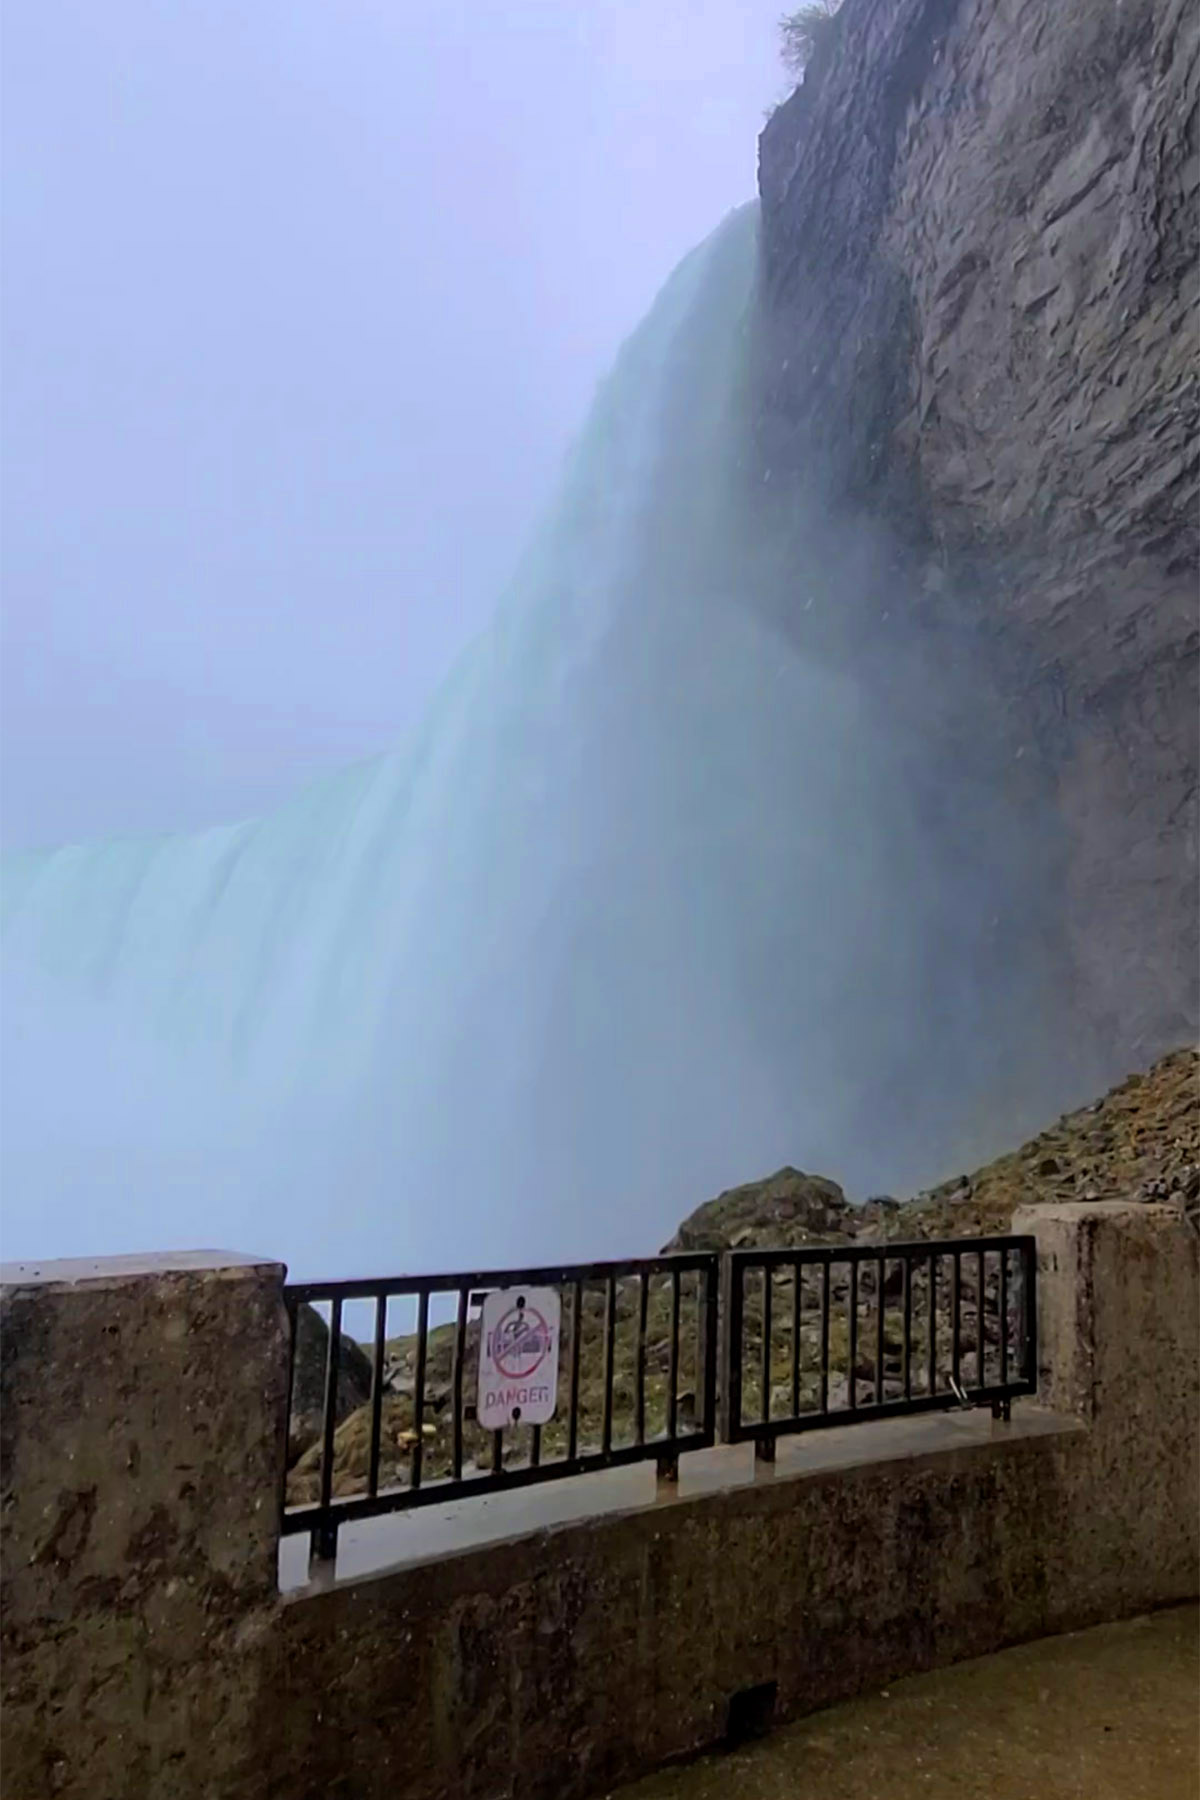 A view of Niagara Falls, from below.